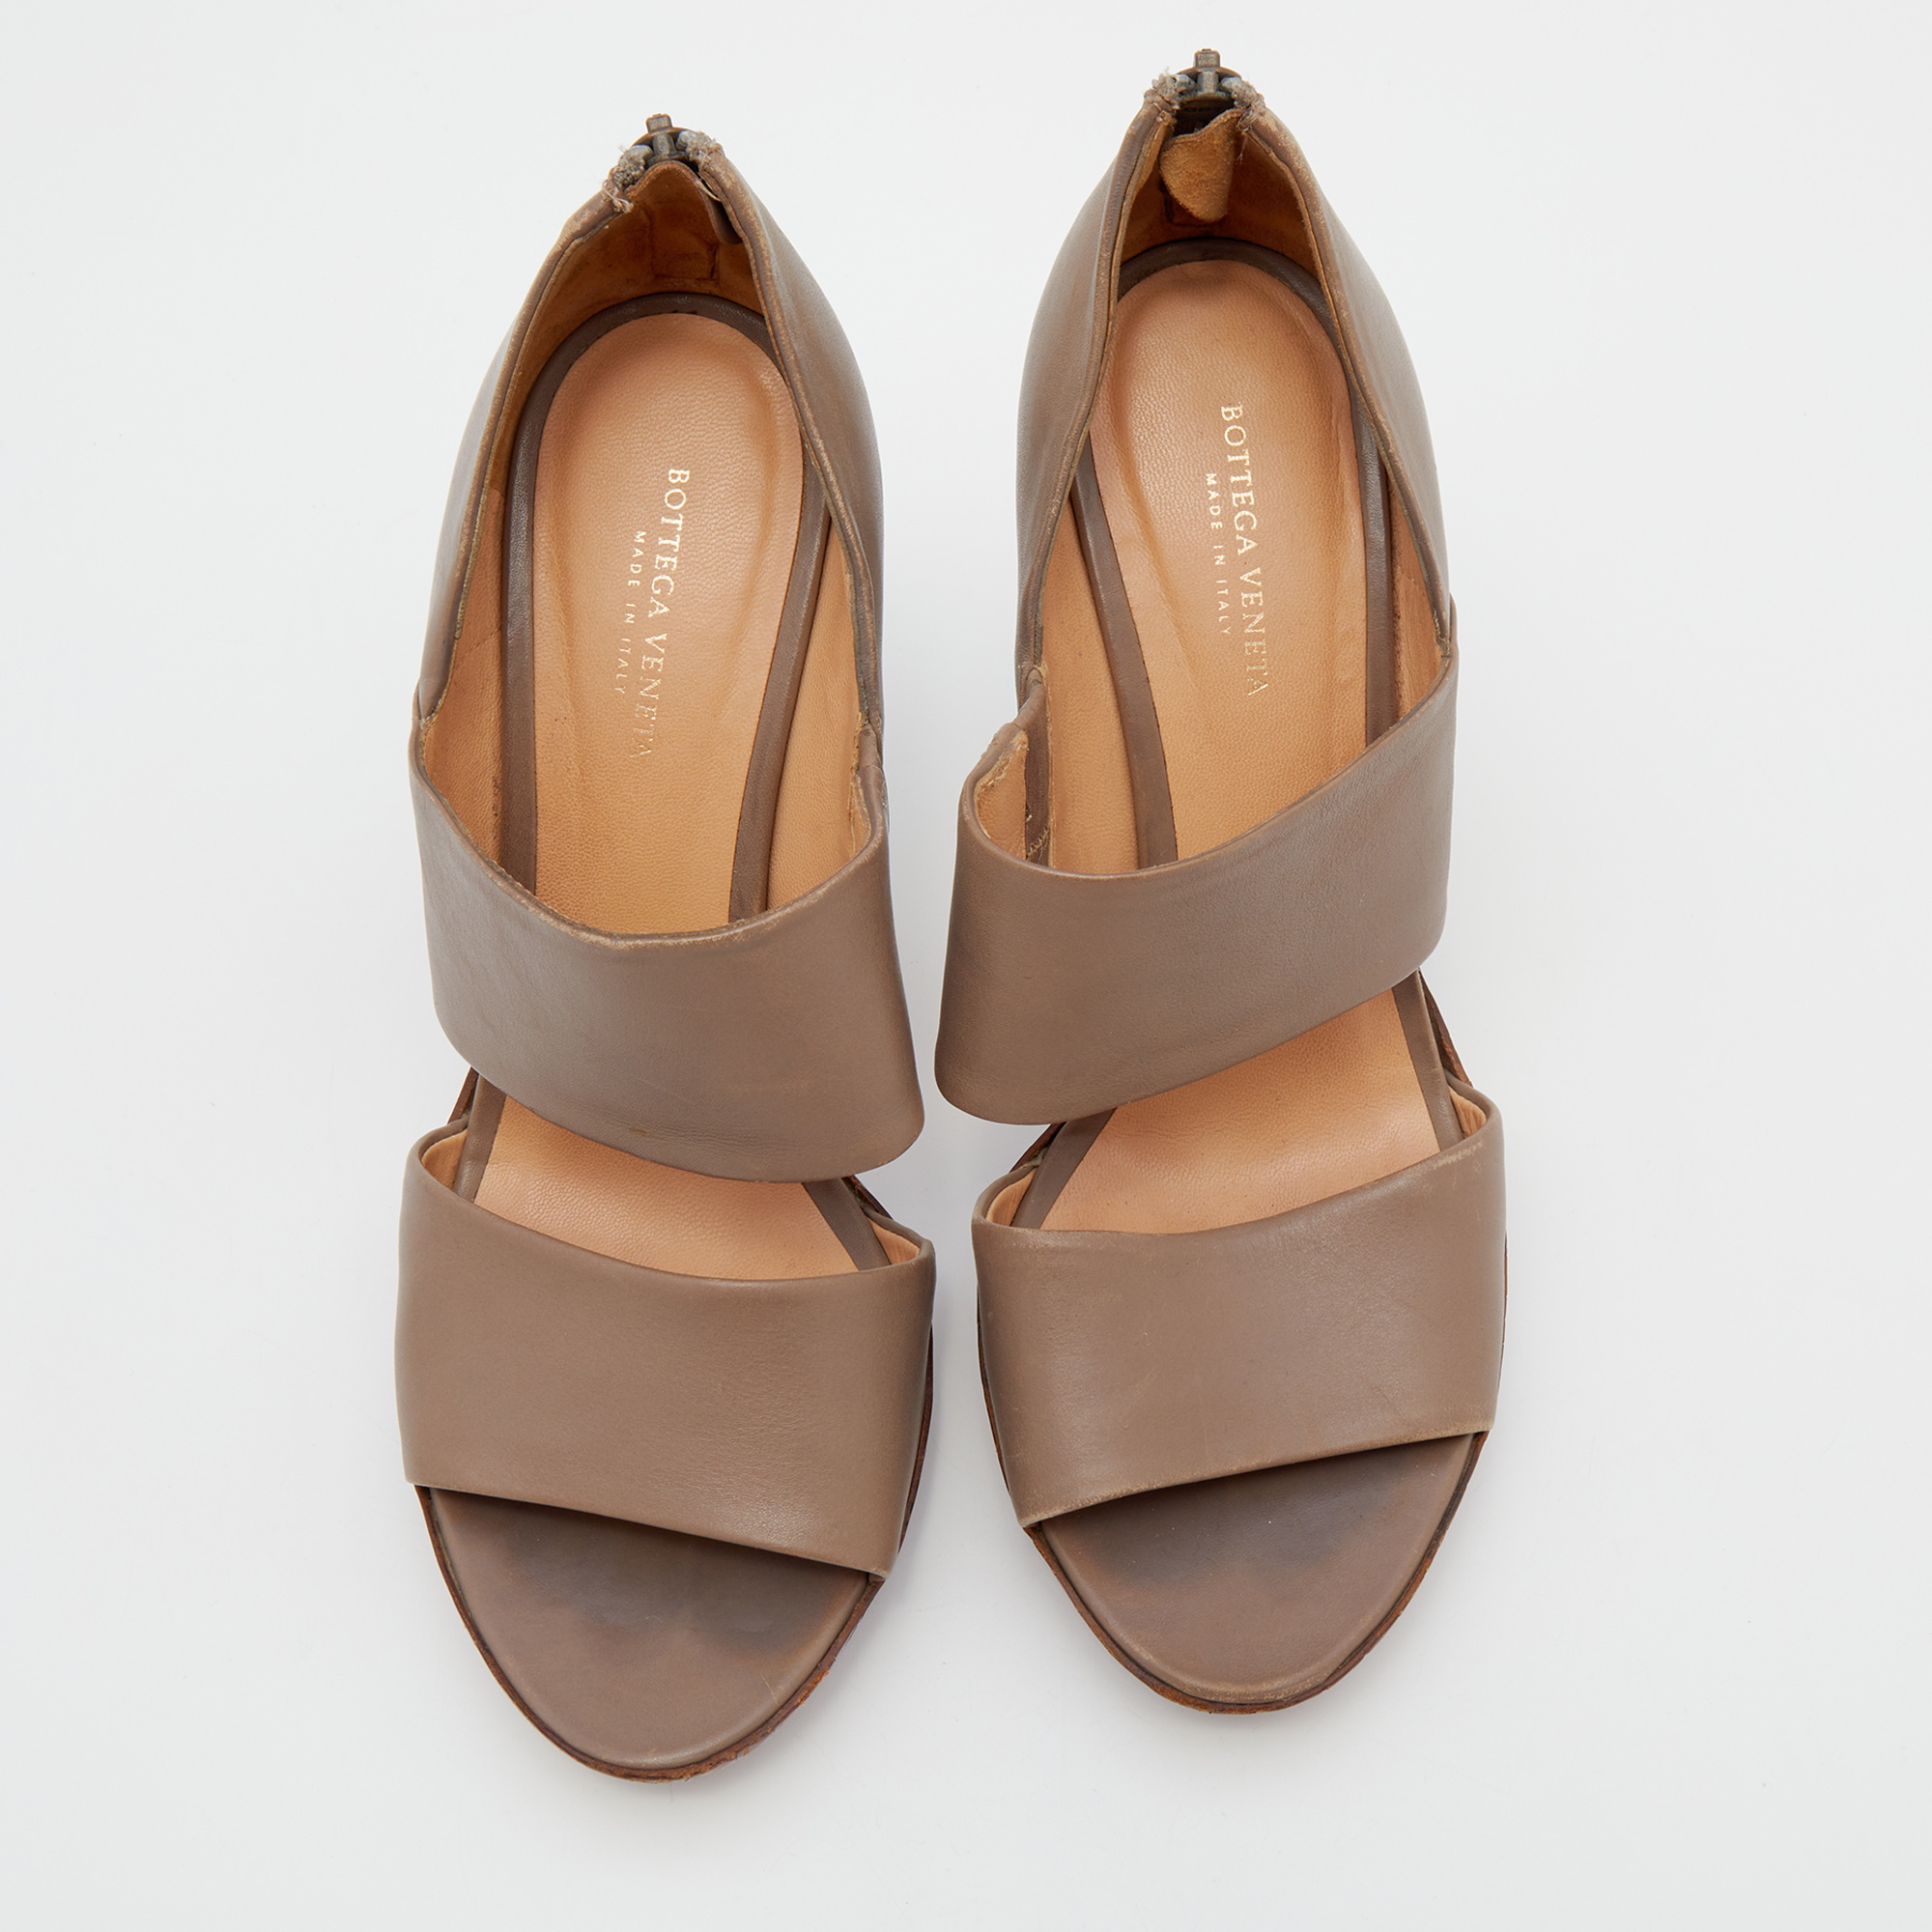 Bottega Veneta Brown Leather Platform Sandals Size 36